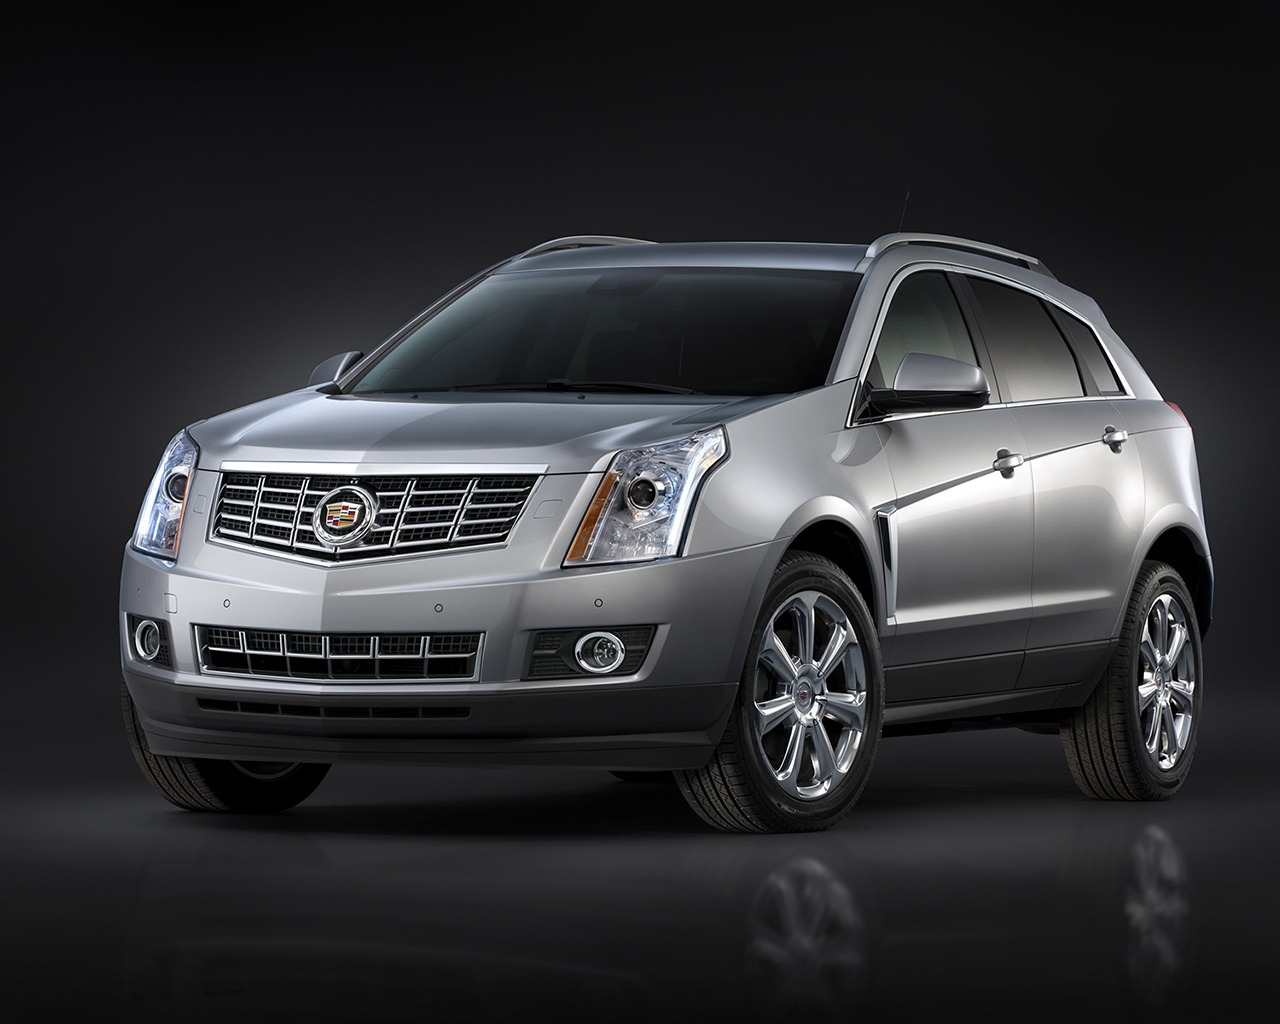 Cadillac SRX Edition 2013 for 1280 x 1024 resolution